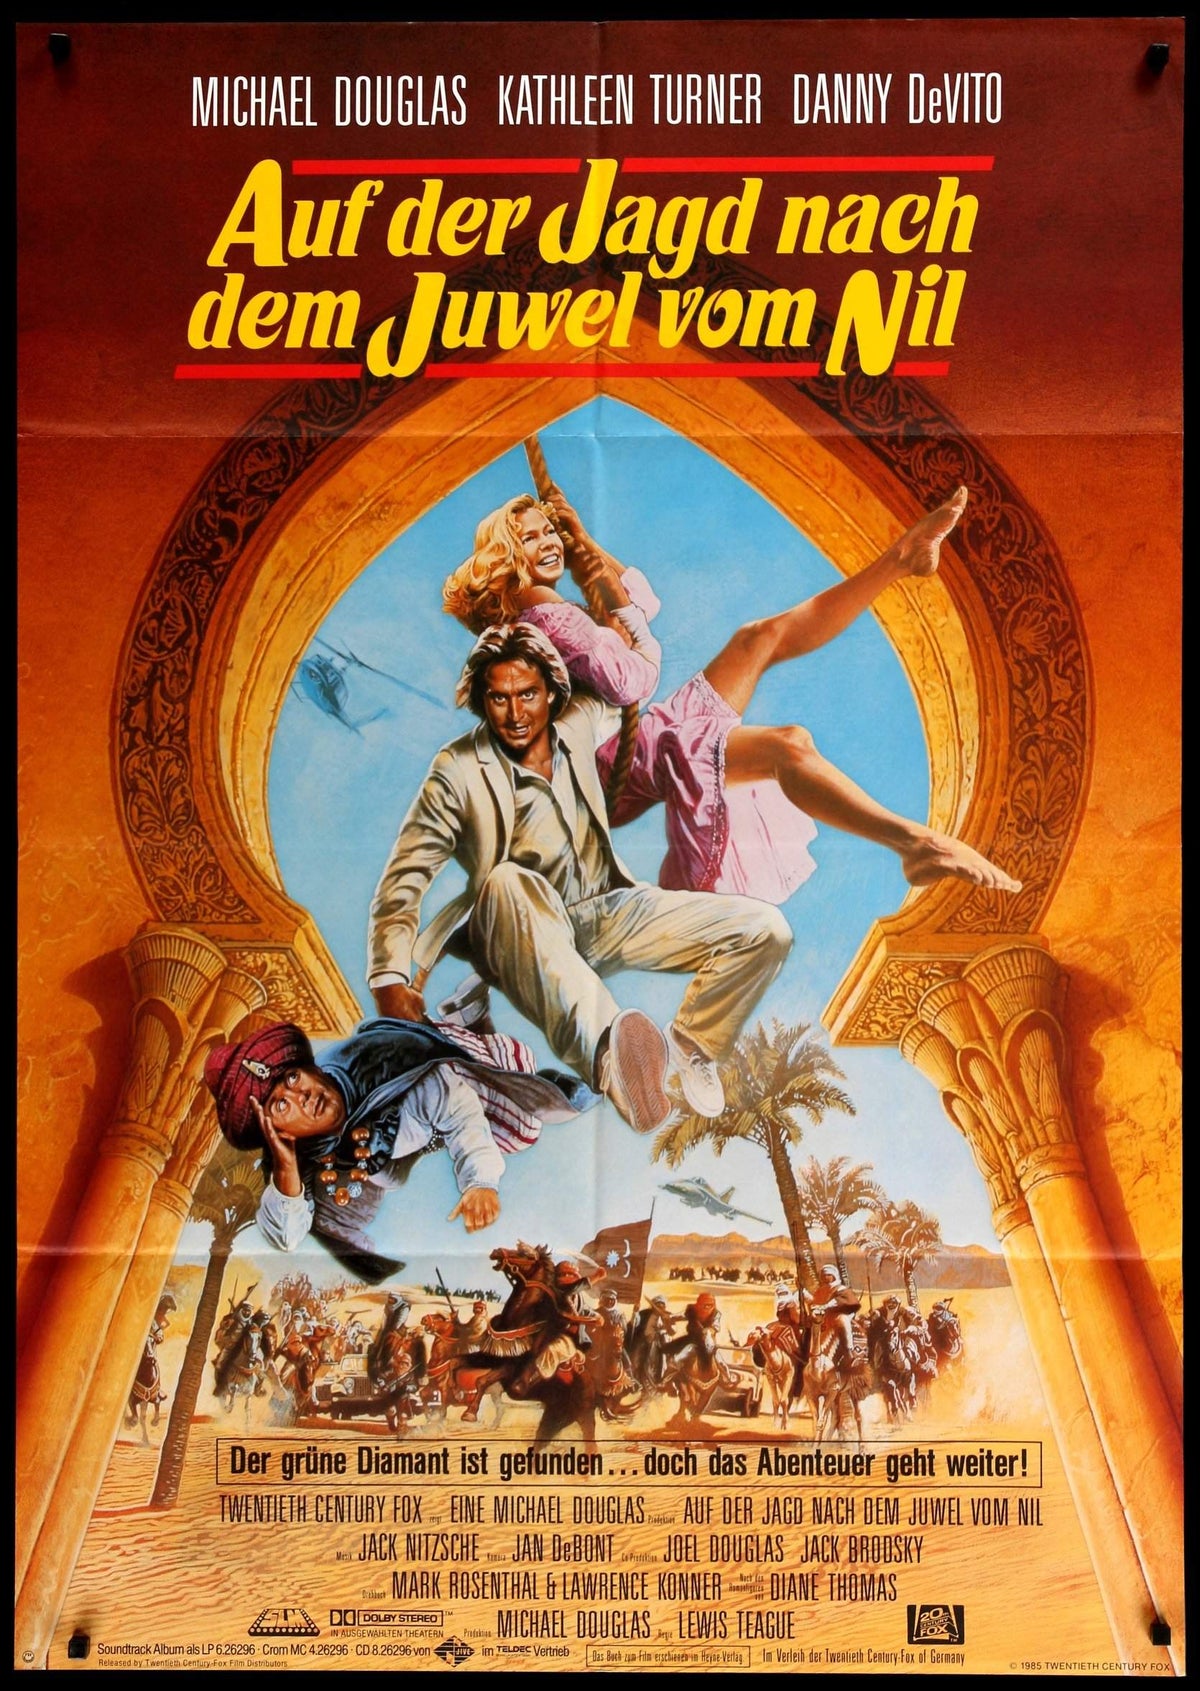 Jewel of the Nile (1985) original movie poster for sale at Original Film Art